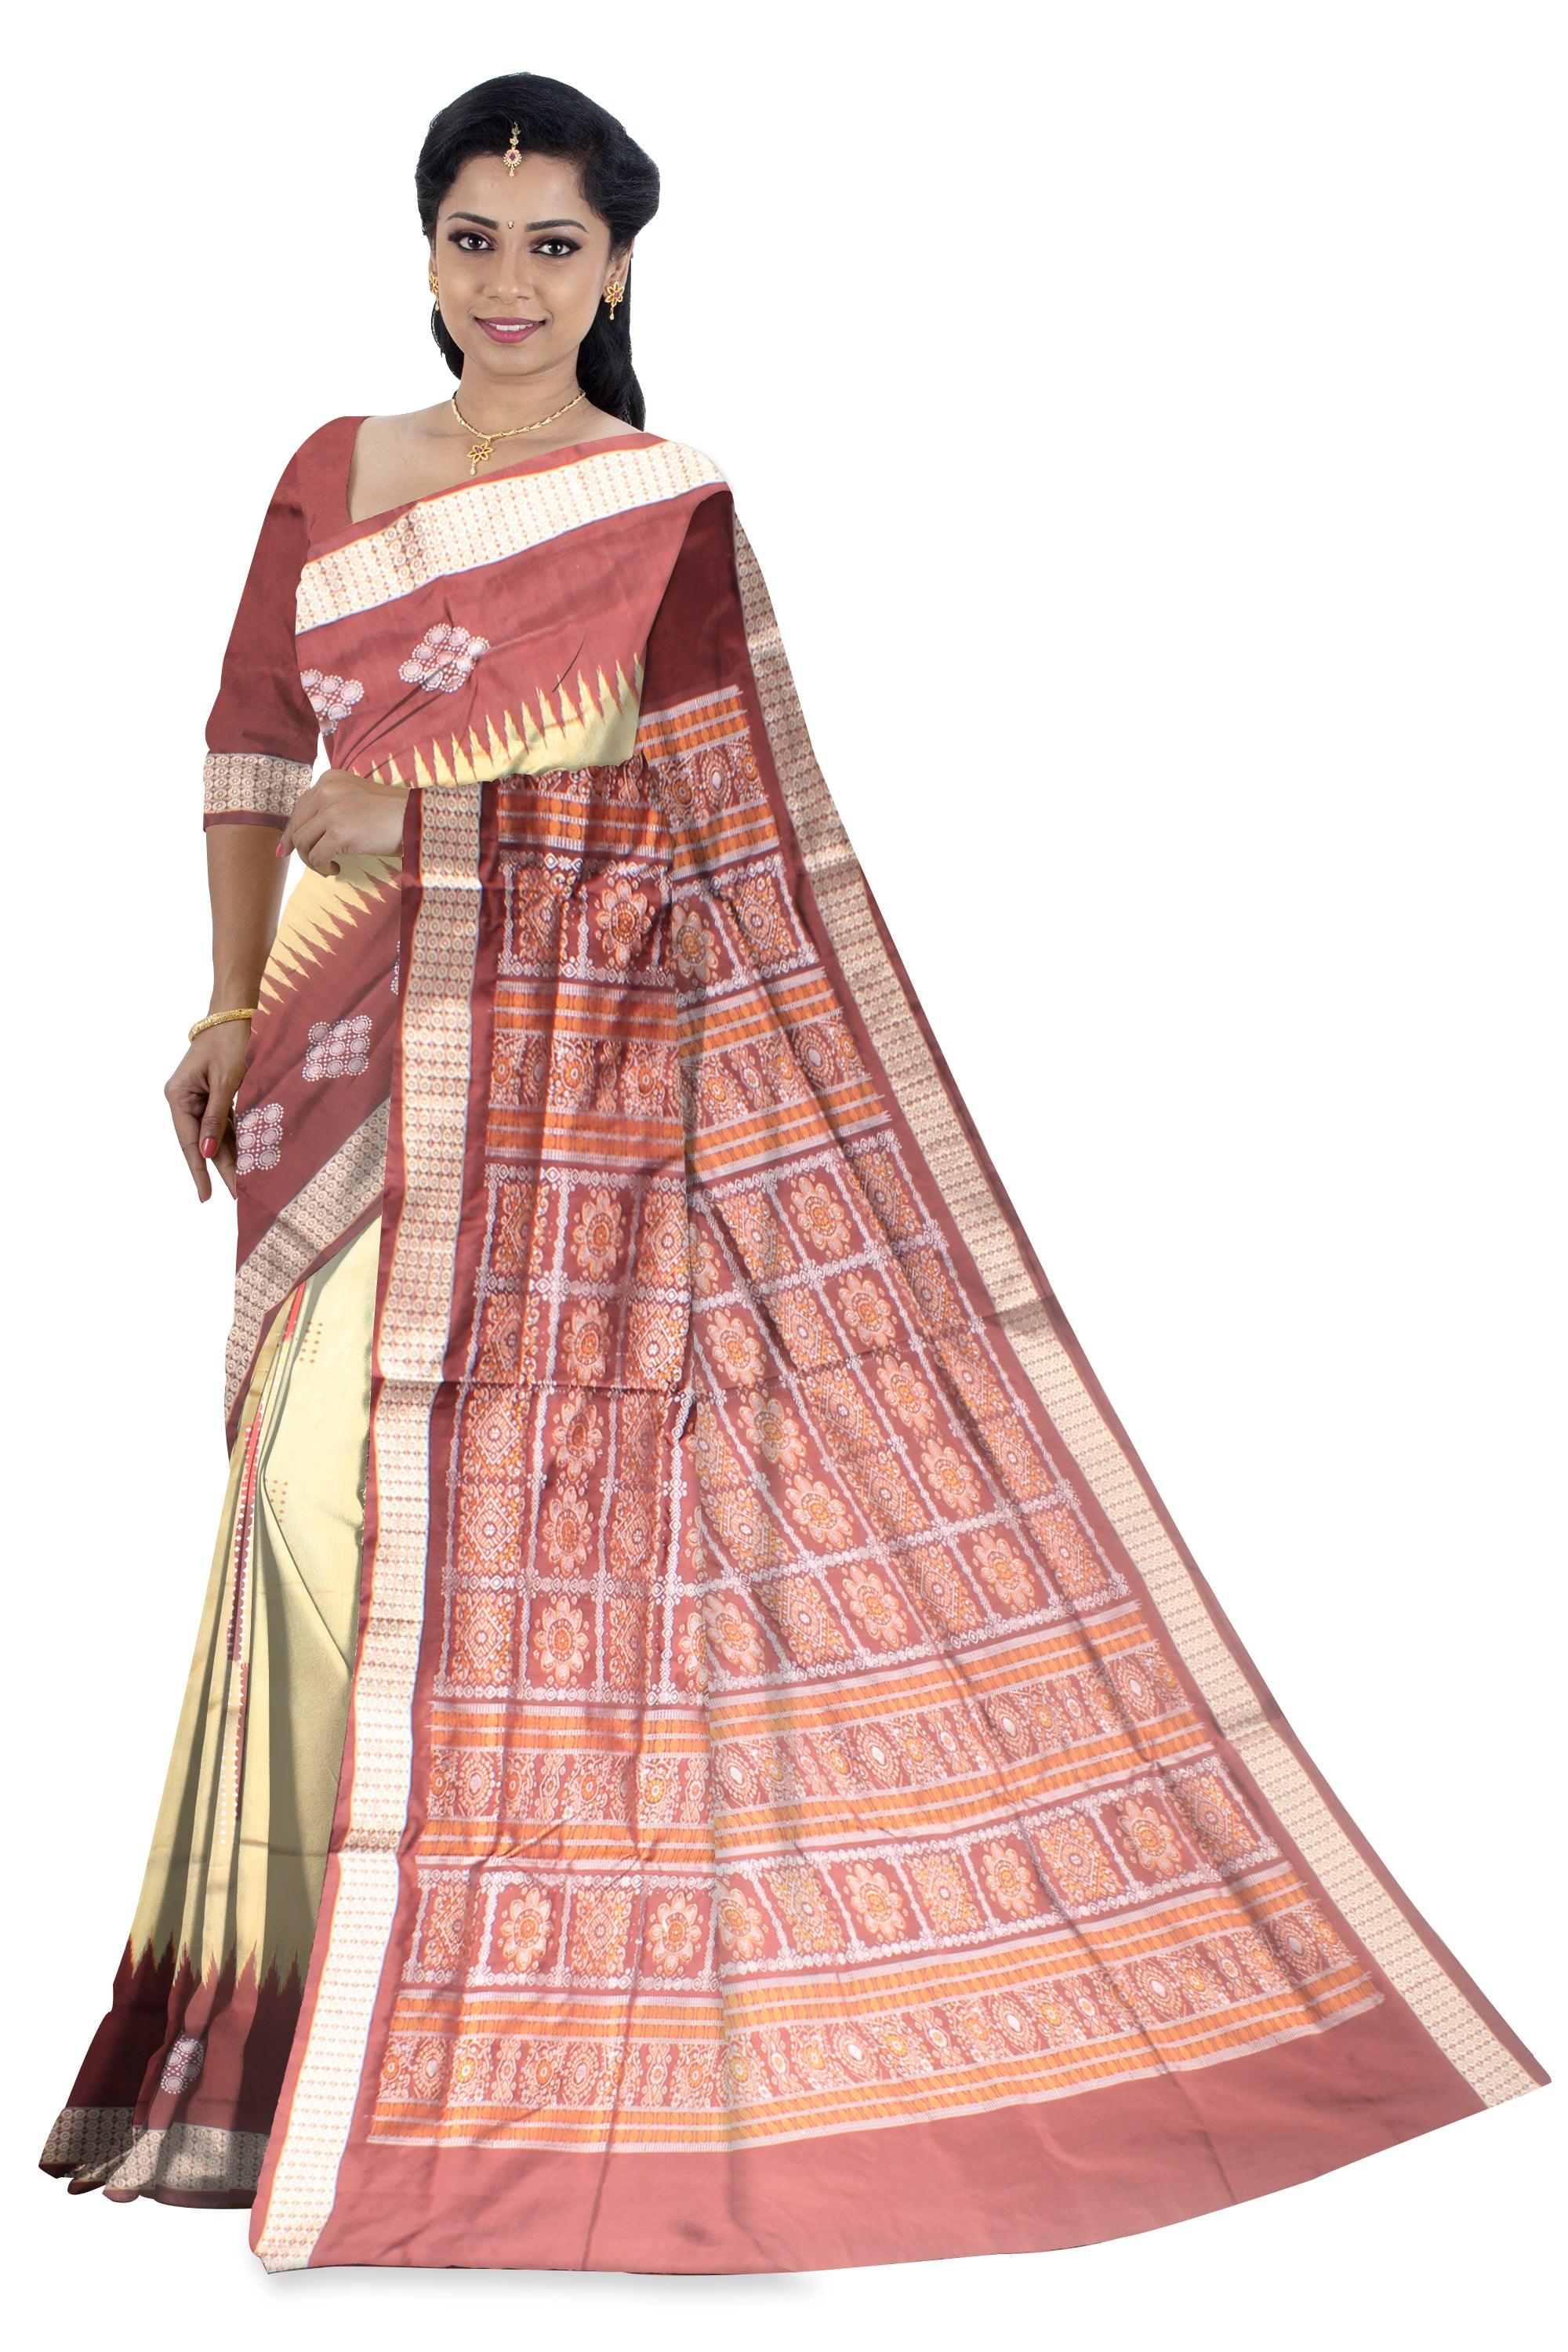 A sambalpuri  pata saree in Golden (peach) and maroon color, with blouse piece. - Koshali Arts & Crafts Enterprise